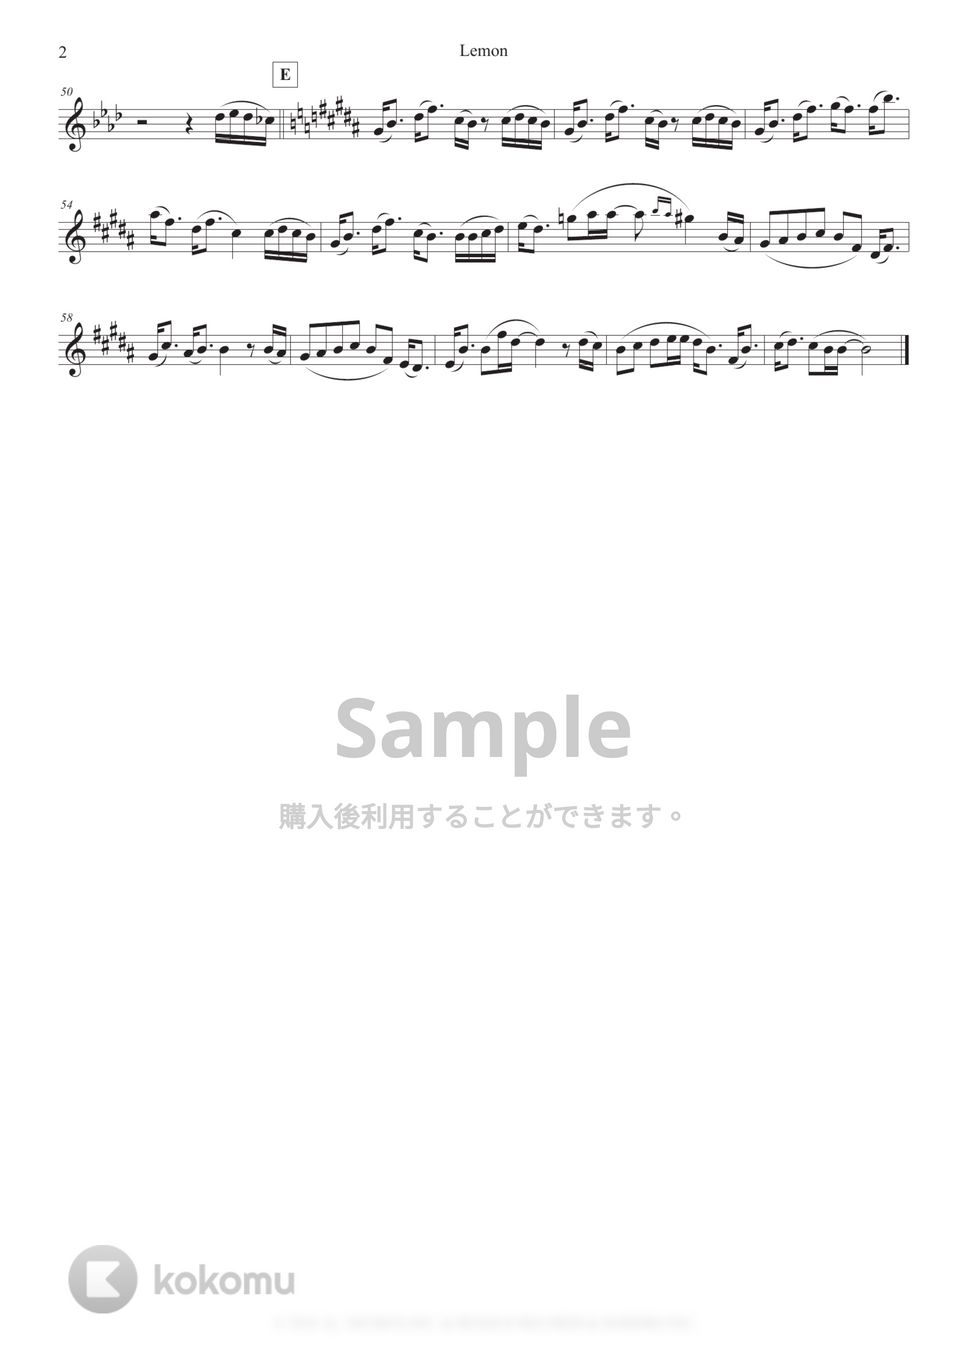 米津玄師 - Lemon (in C/上級 Original Key) by Sumika